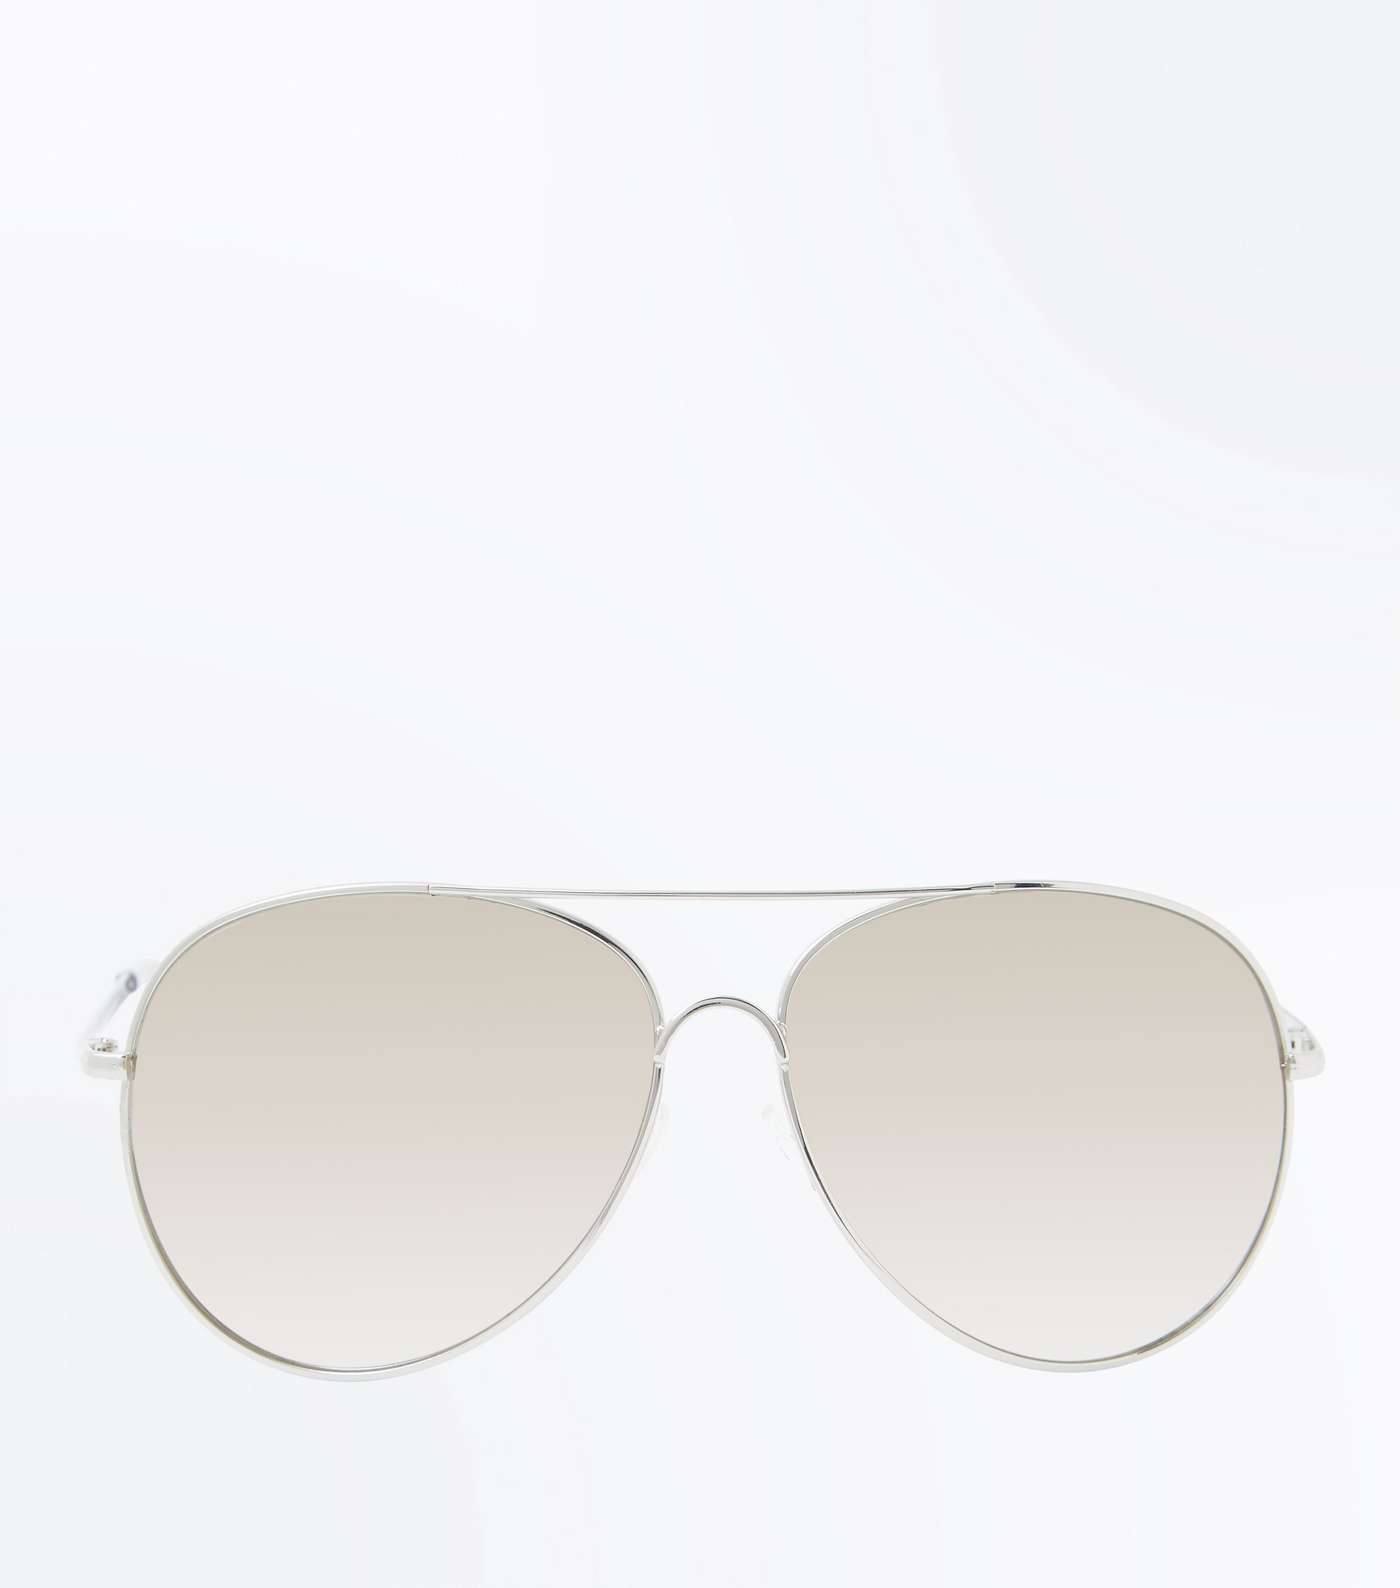 Silver Mirror Lens Aviator Style Sunglasses Image 3